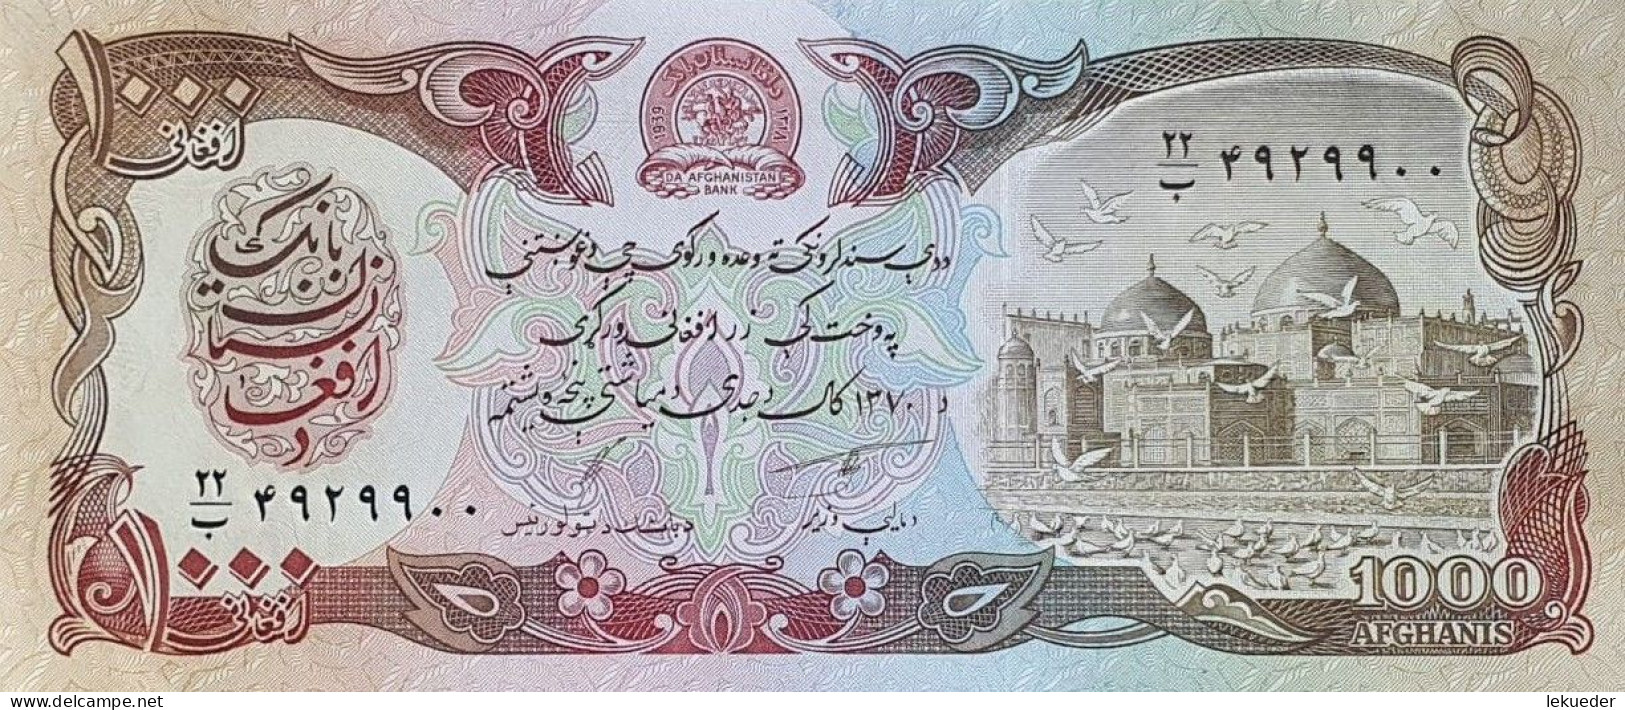 Billete De Banco De AFGANISTÁN - 1000 Afghanis, 1991  Sin Cursar - Afghanistan